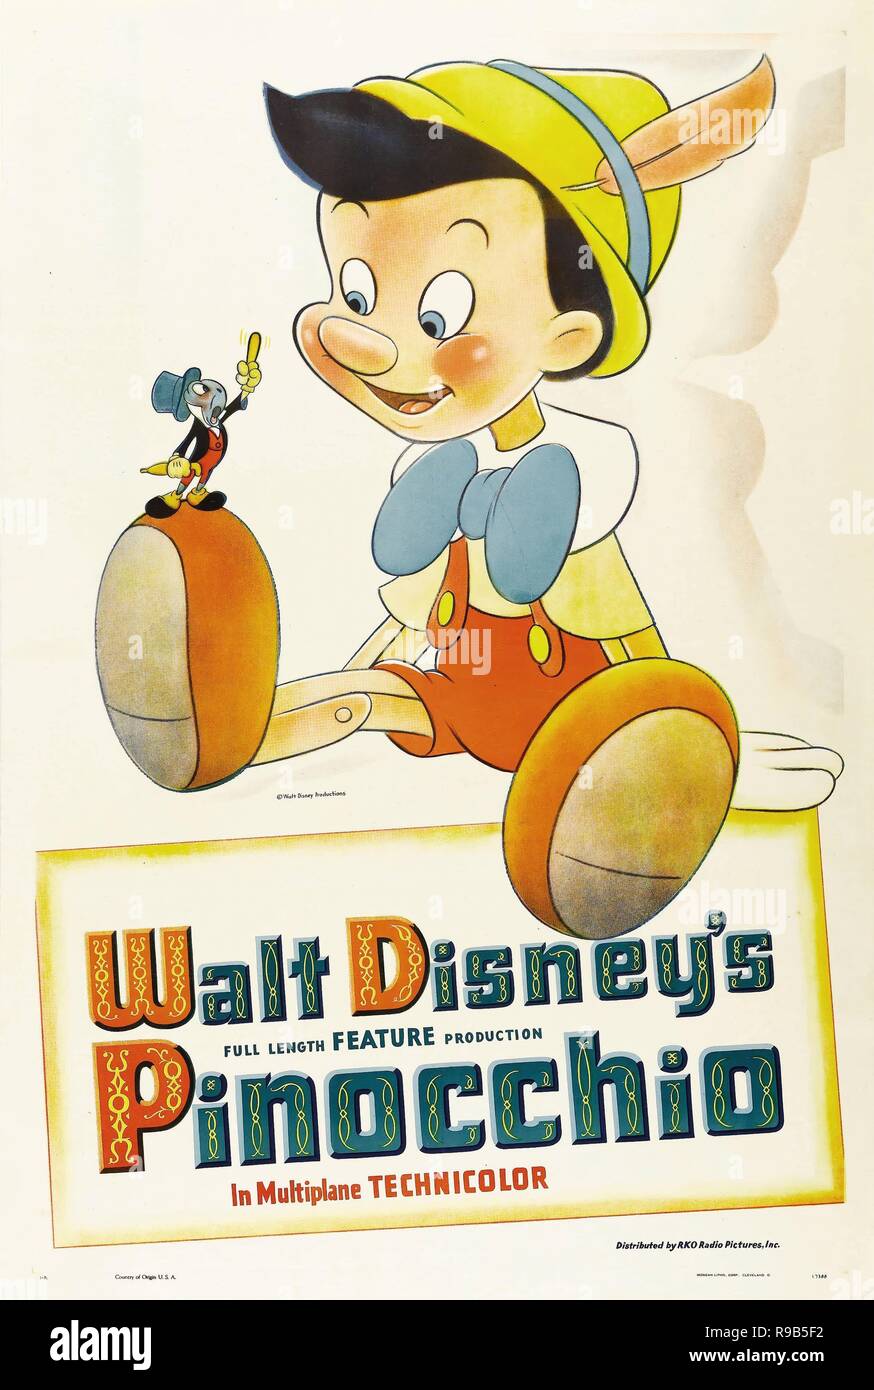 Original film title: PINOCCHIO. English title: PINOCCHIO. Year: 1940. Director: HAMILTON LUSKE; BEN SHARPSTEEN. Credit: WALT DISNEY PRODUCTIONS / Album Stock Photo